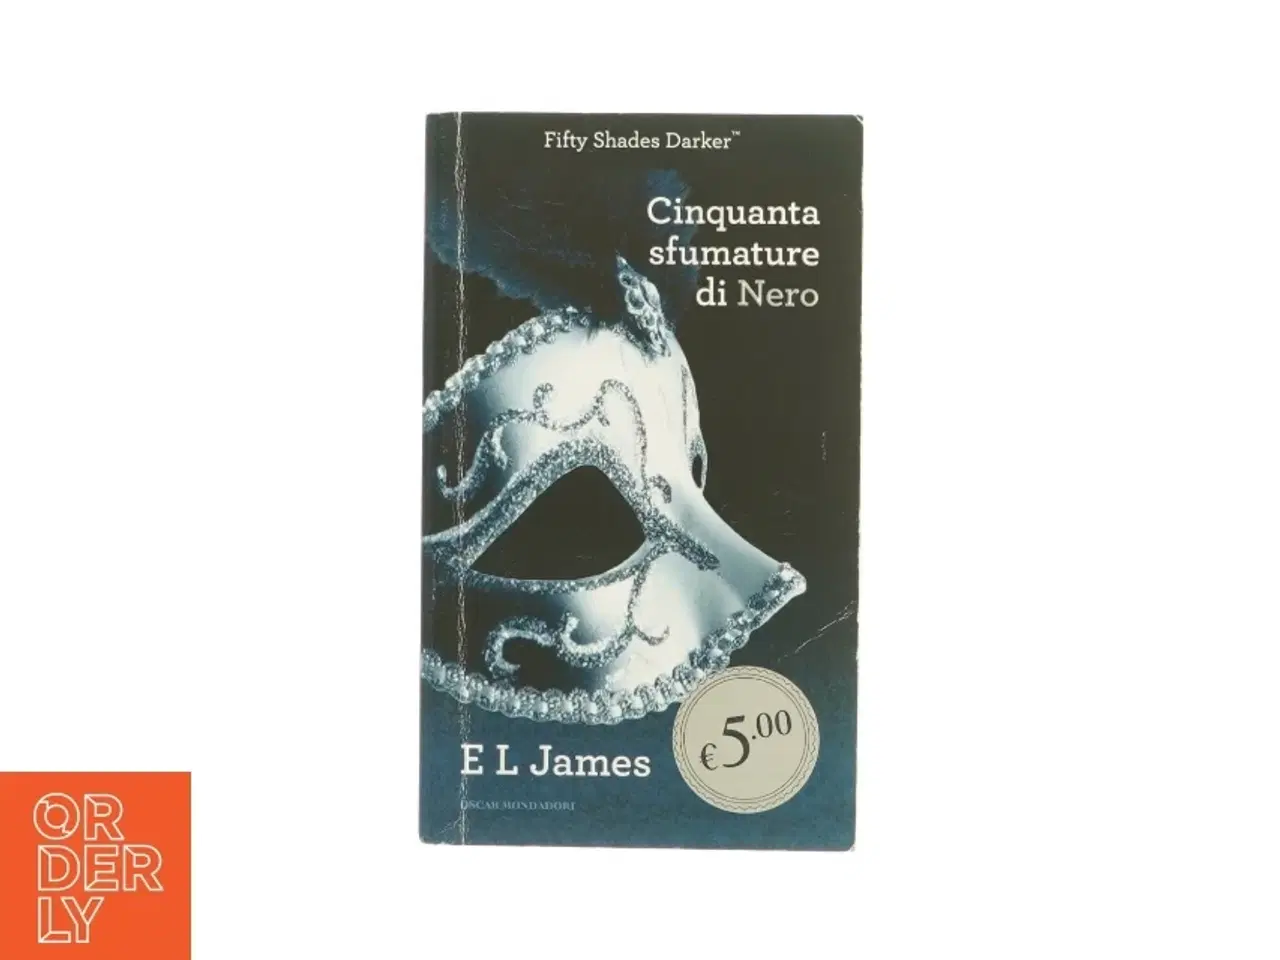 Billede 1 - Fifty shades darker - Cinquanra sfumature de nero af EL James (bog)